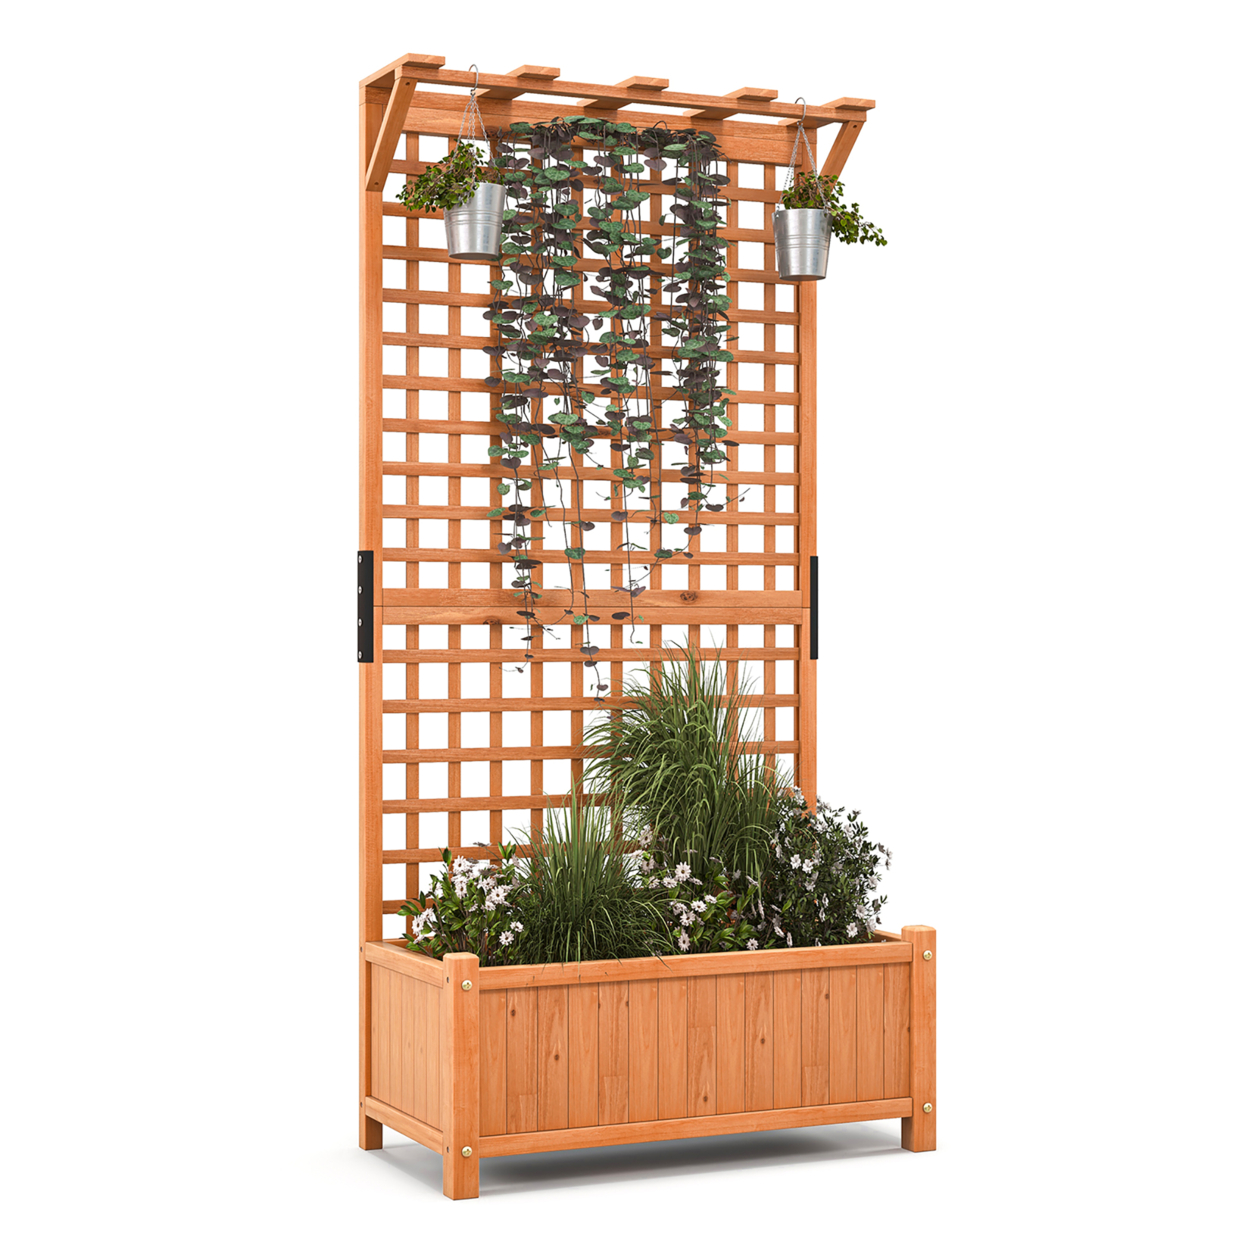 Wooden Planter Raised Garden Bed W/ Planter Box & Trellis Indoor & Outdoor